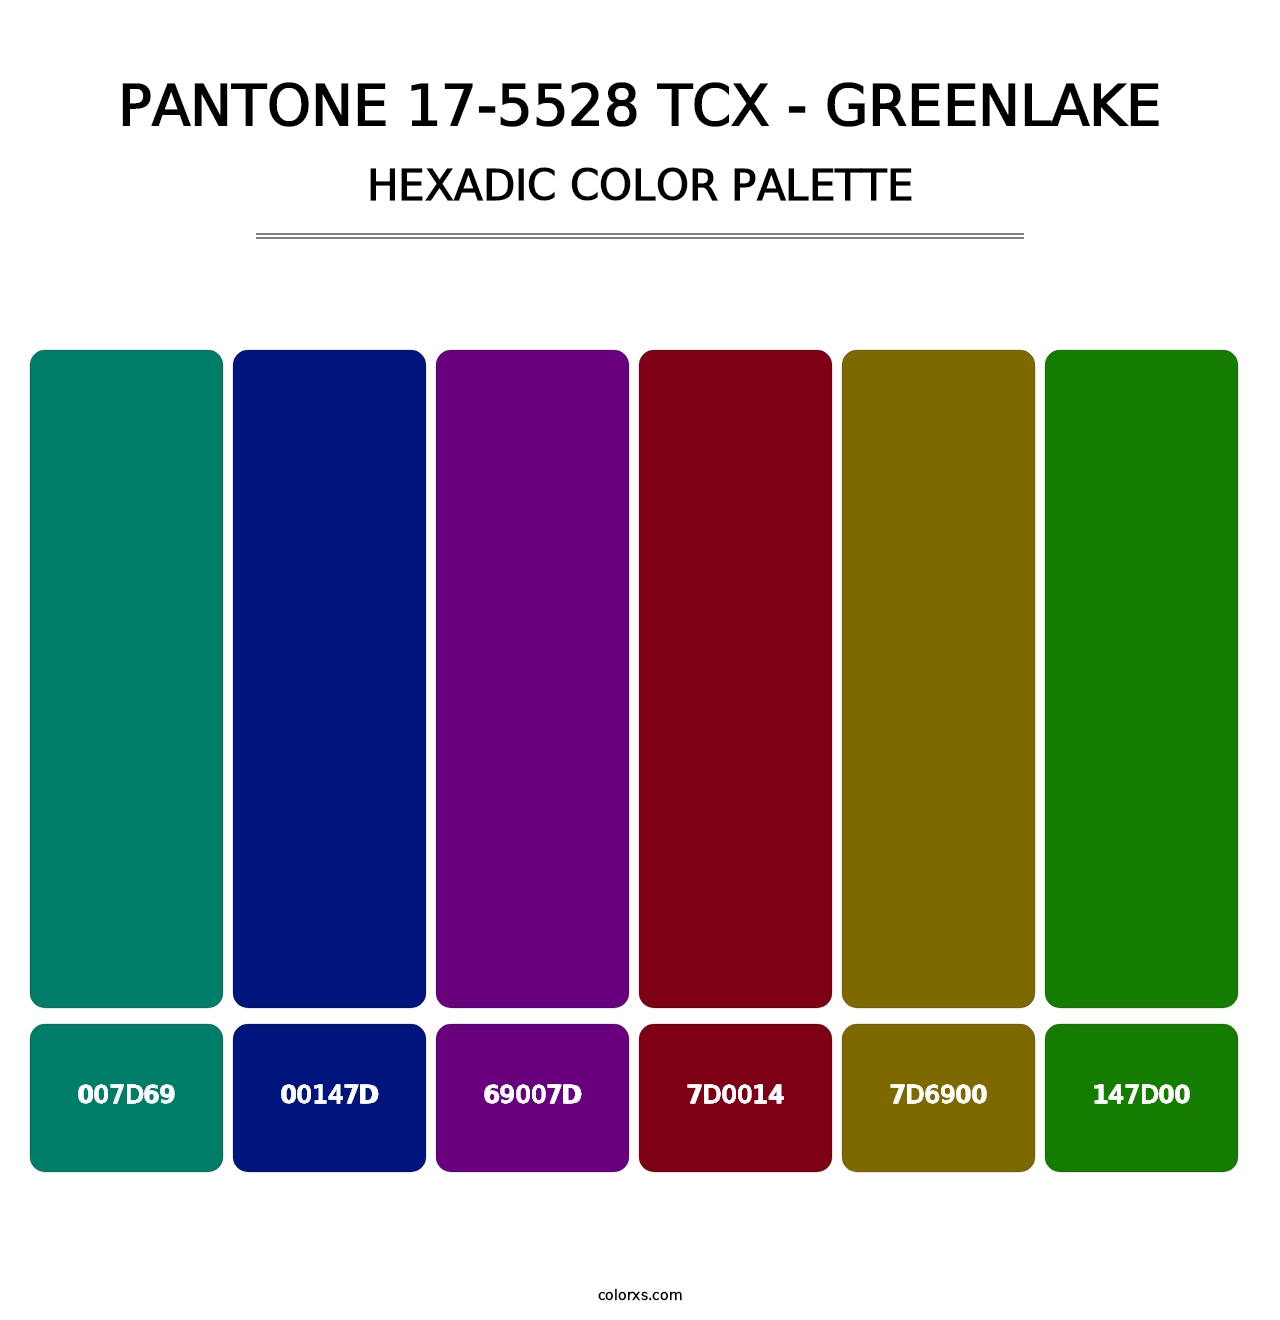 PANTONE 17-5528 TCX - Greenlake - Hexadic Color Palette